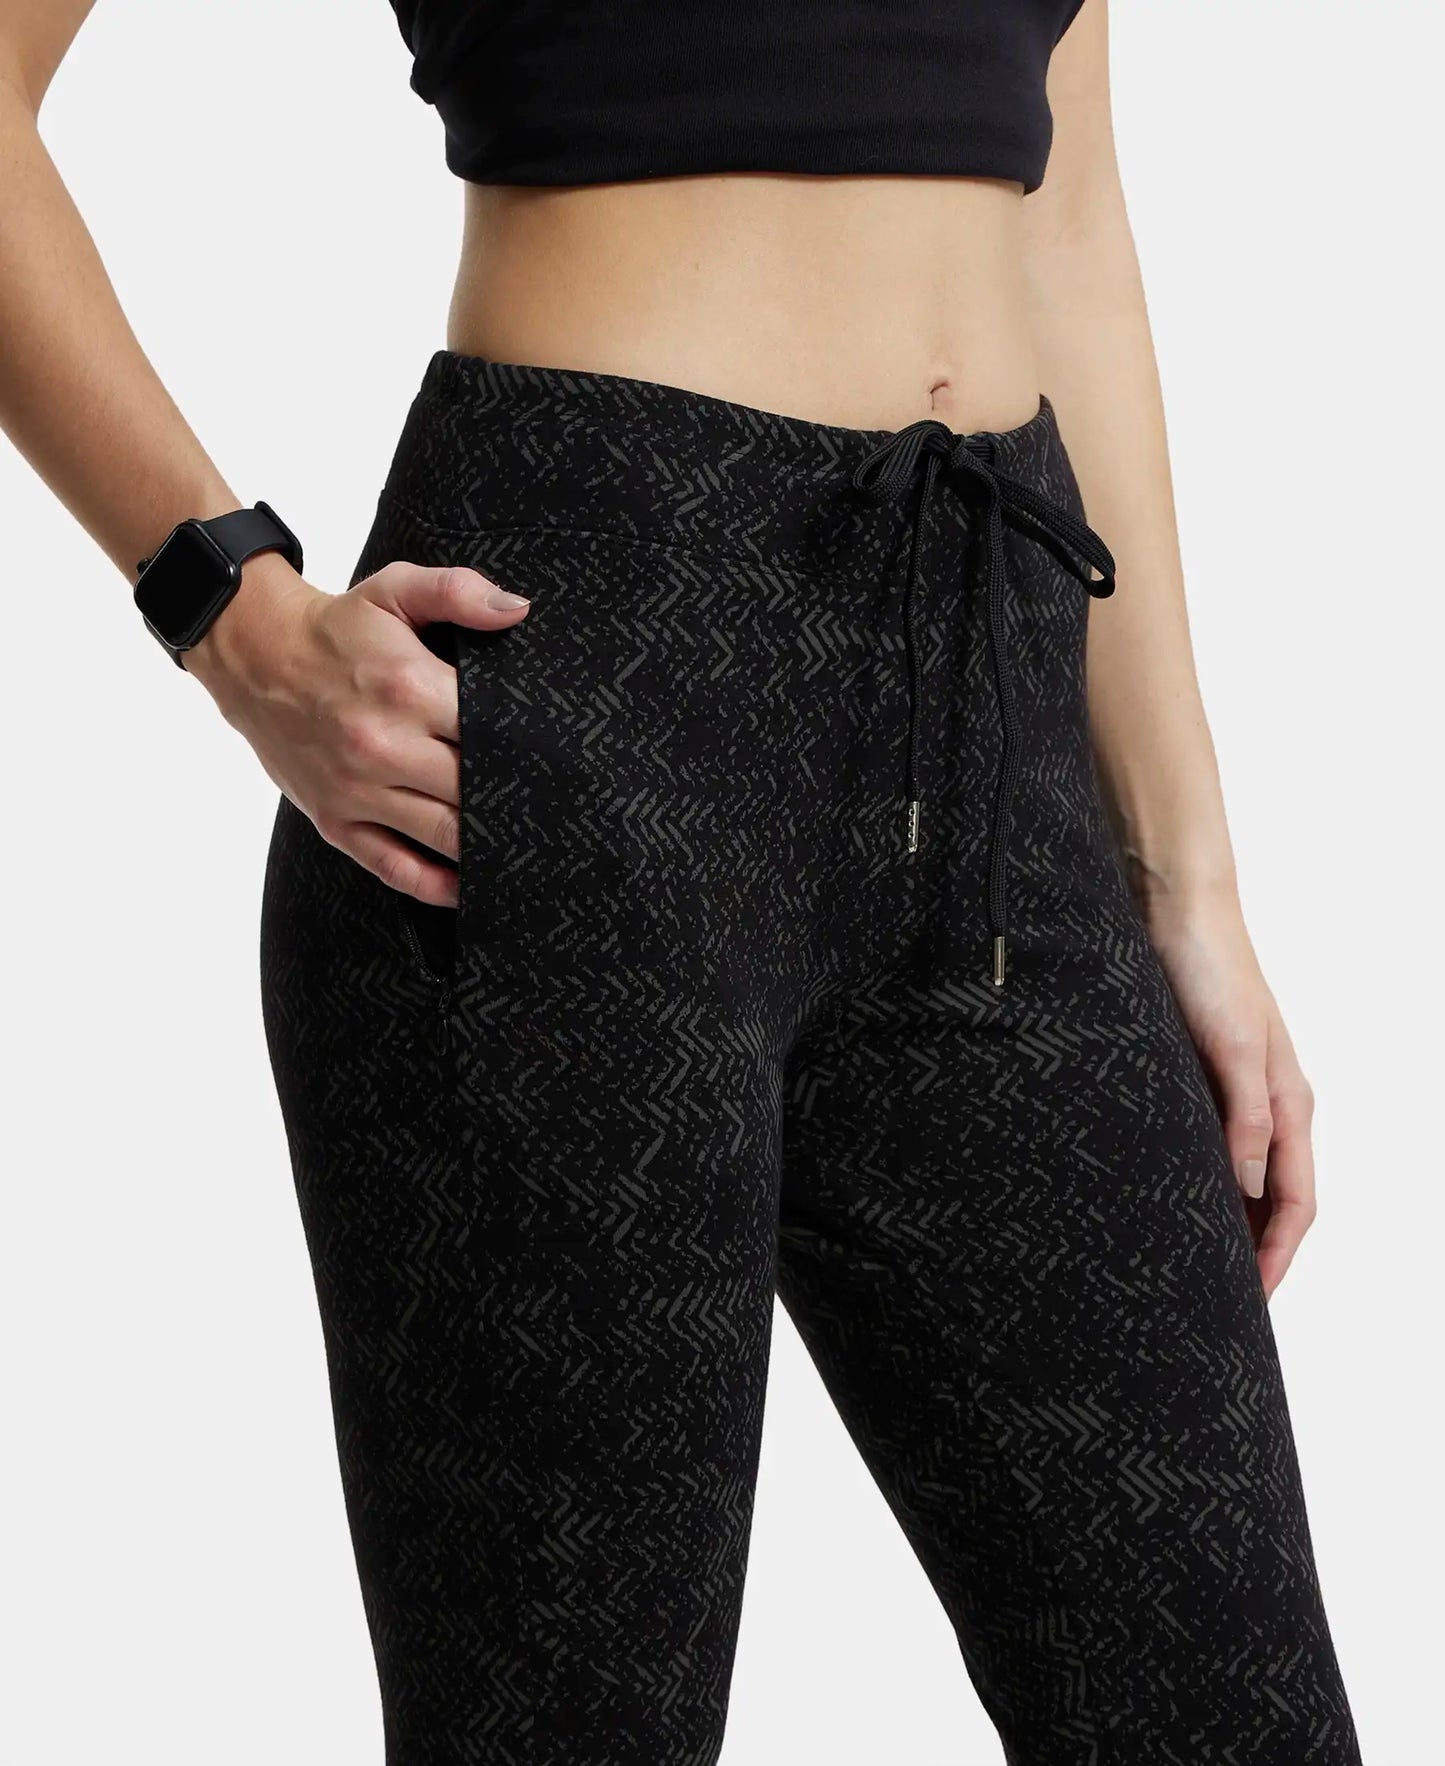 Super Combed Cotton Elastane Yoga Pants with Side Zipper Pocket - Black Printed-6